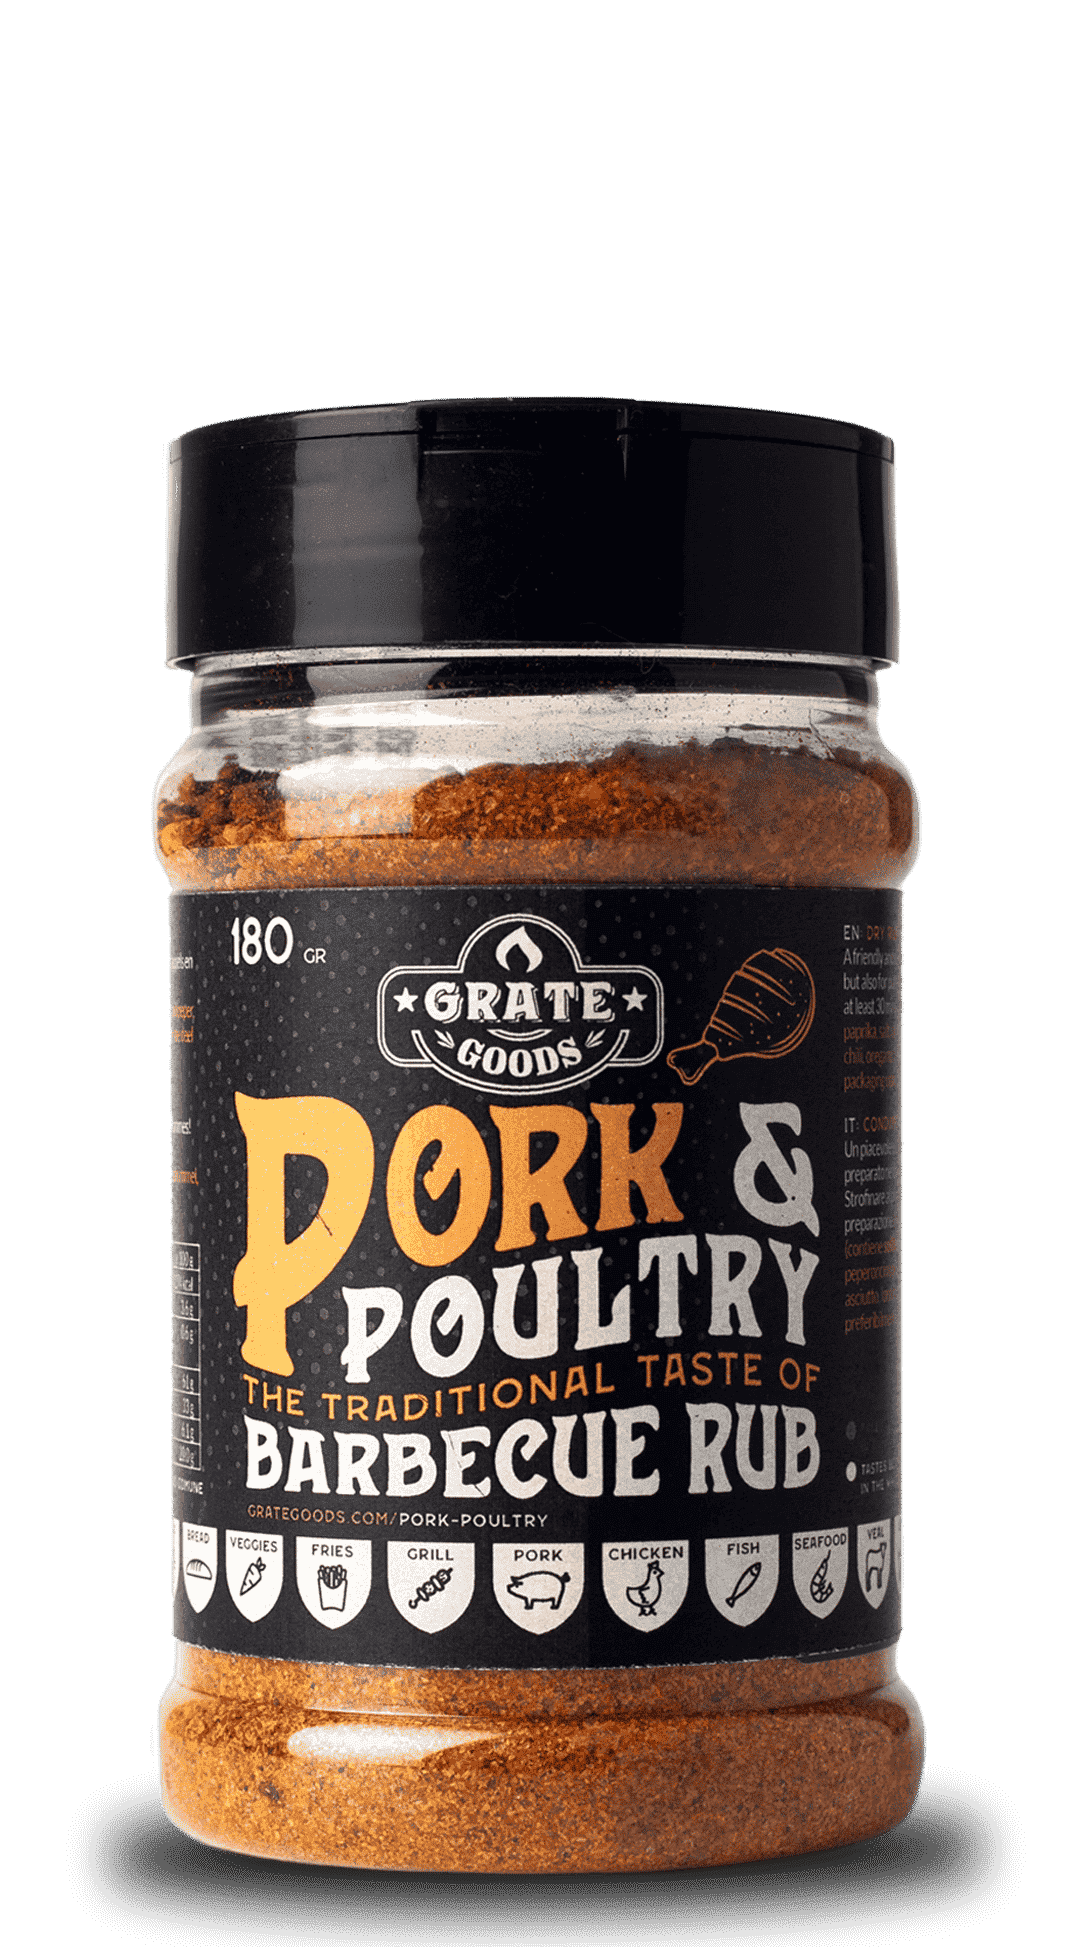 Grate Goods Pork & Poultry Barbecue Rub - 180 gram